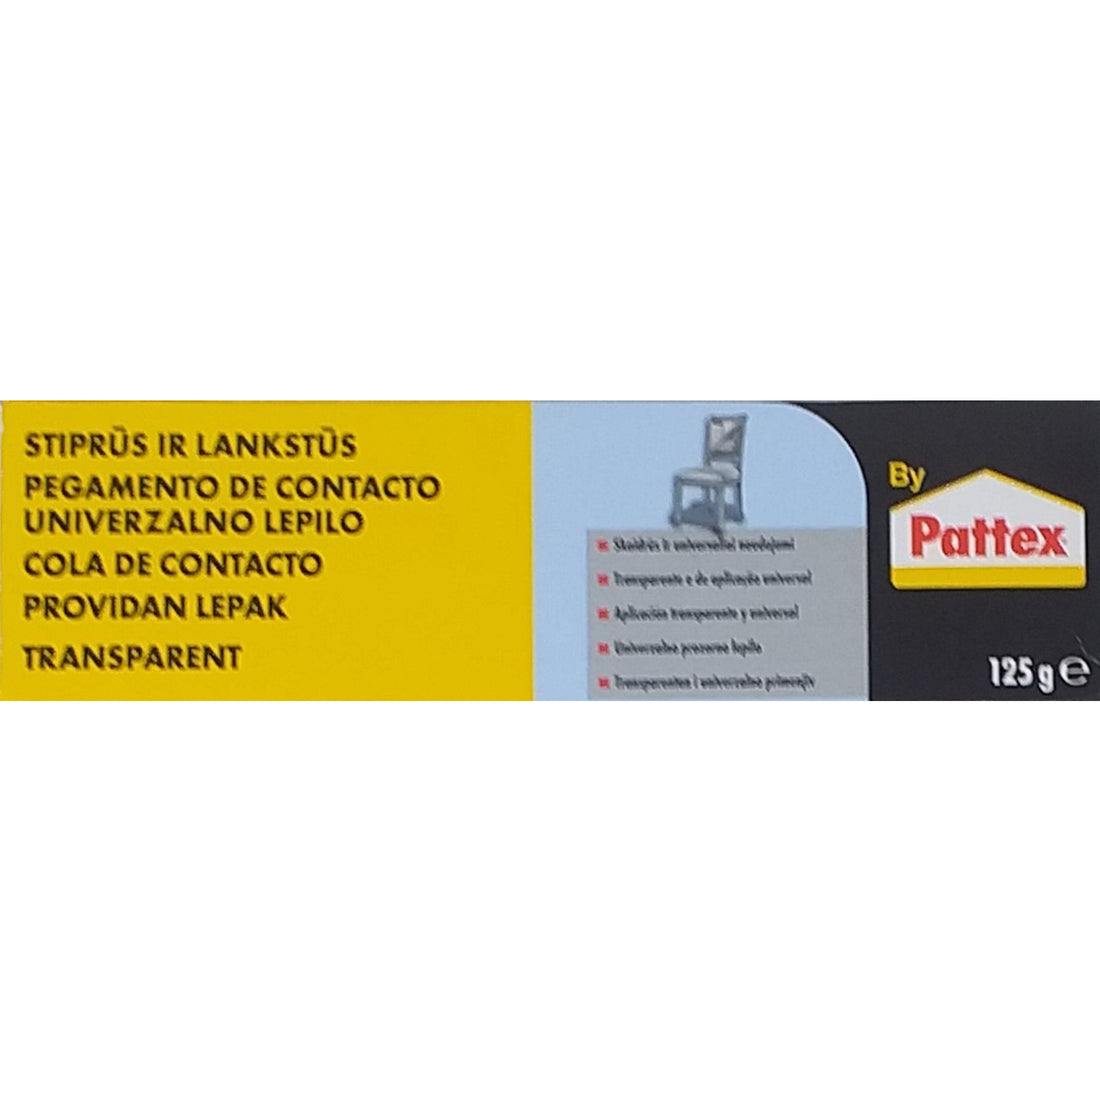 Pattex Krafttkleber  Classic 125g  DE Transp.  in Faltschachtel  LPRH1-1